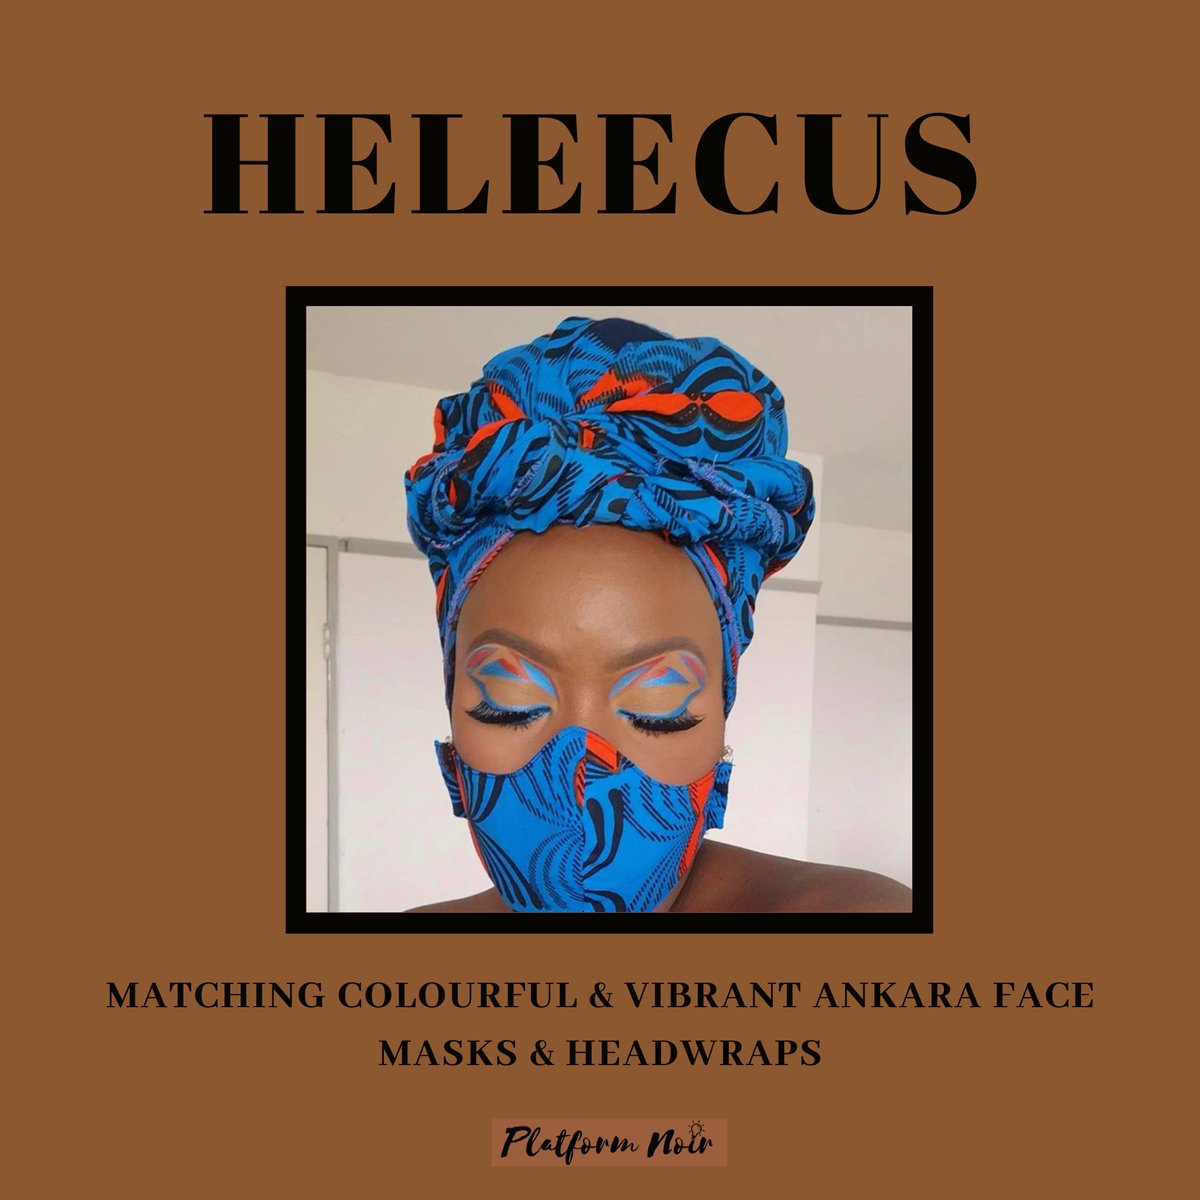  @HELEECUS Matching colourful & vibrant Ankara face masks & headwraps https://www.heleecus.com/  https://instagram.com/heleecus?igshid=gugvz4f4tqo0